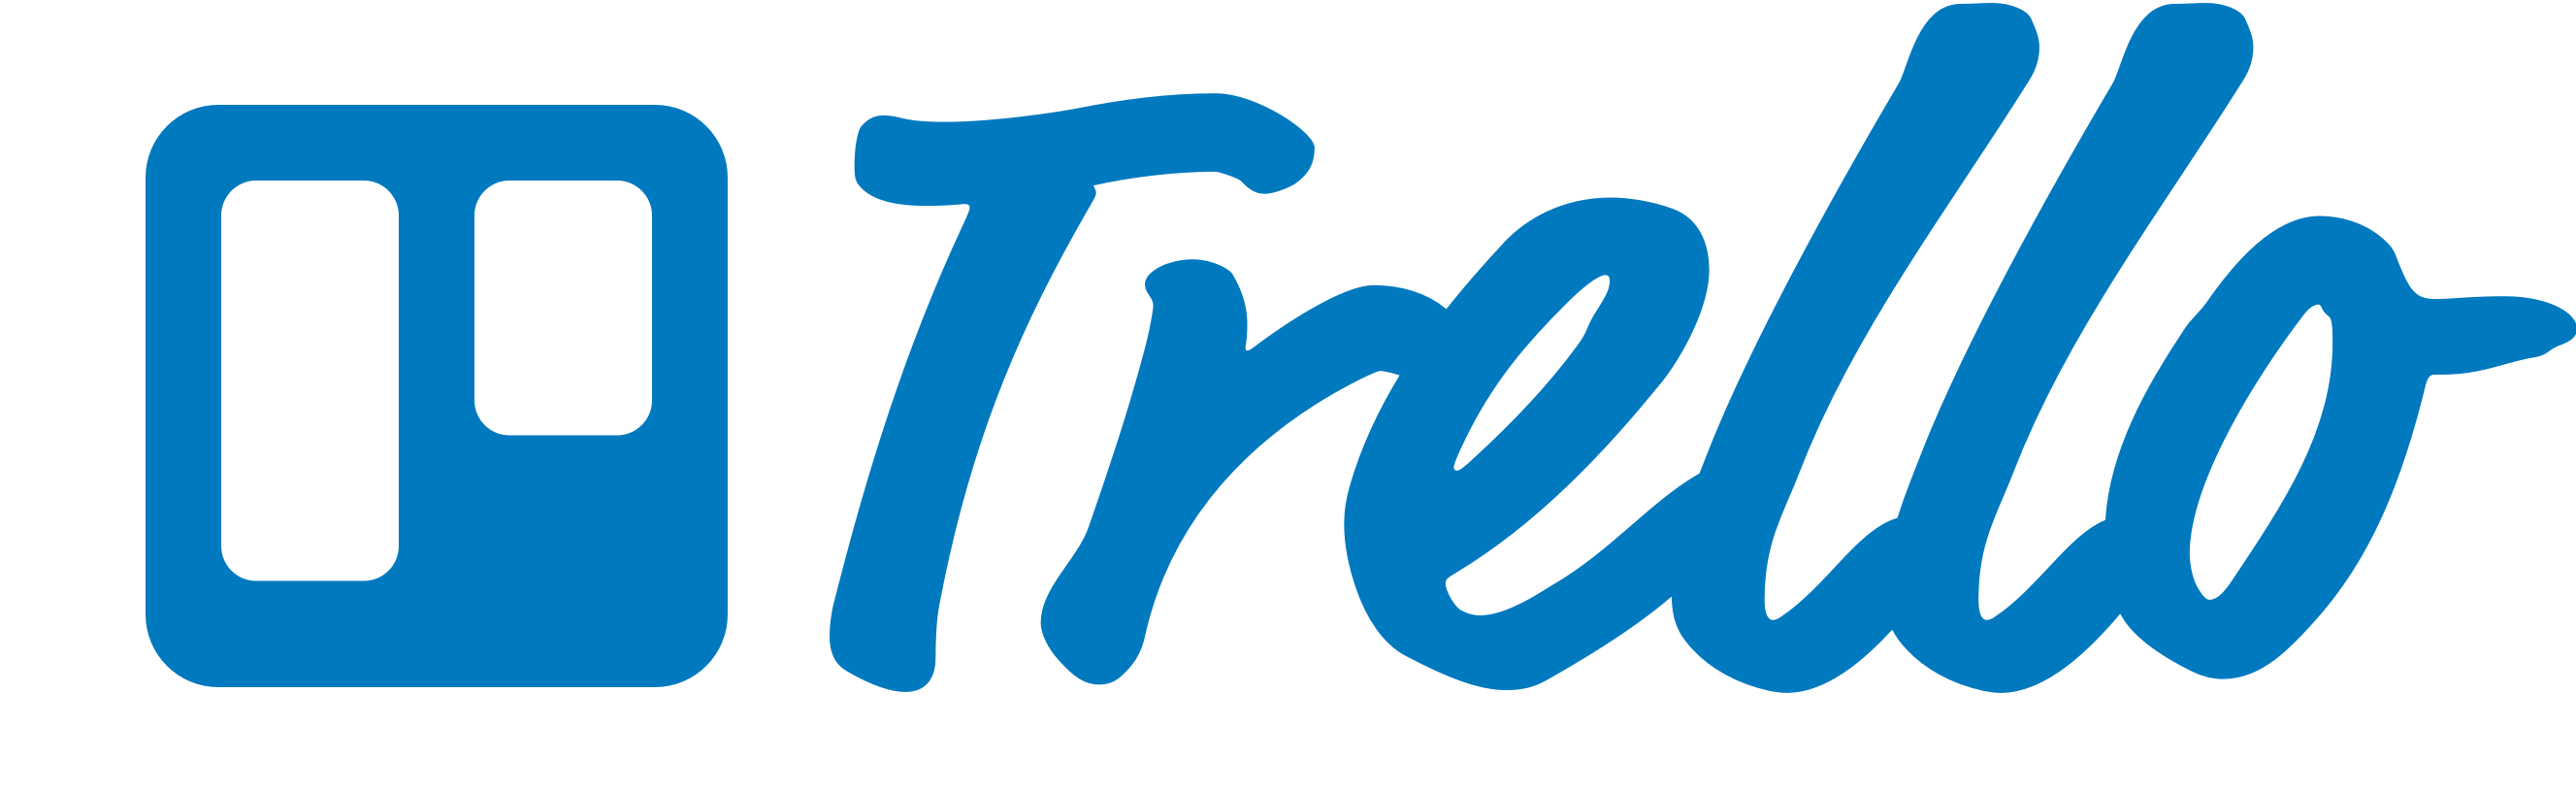 trello free business tool